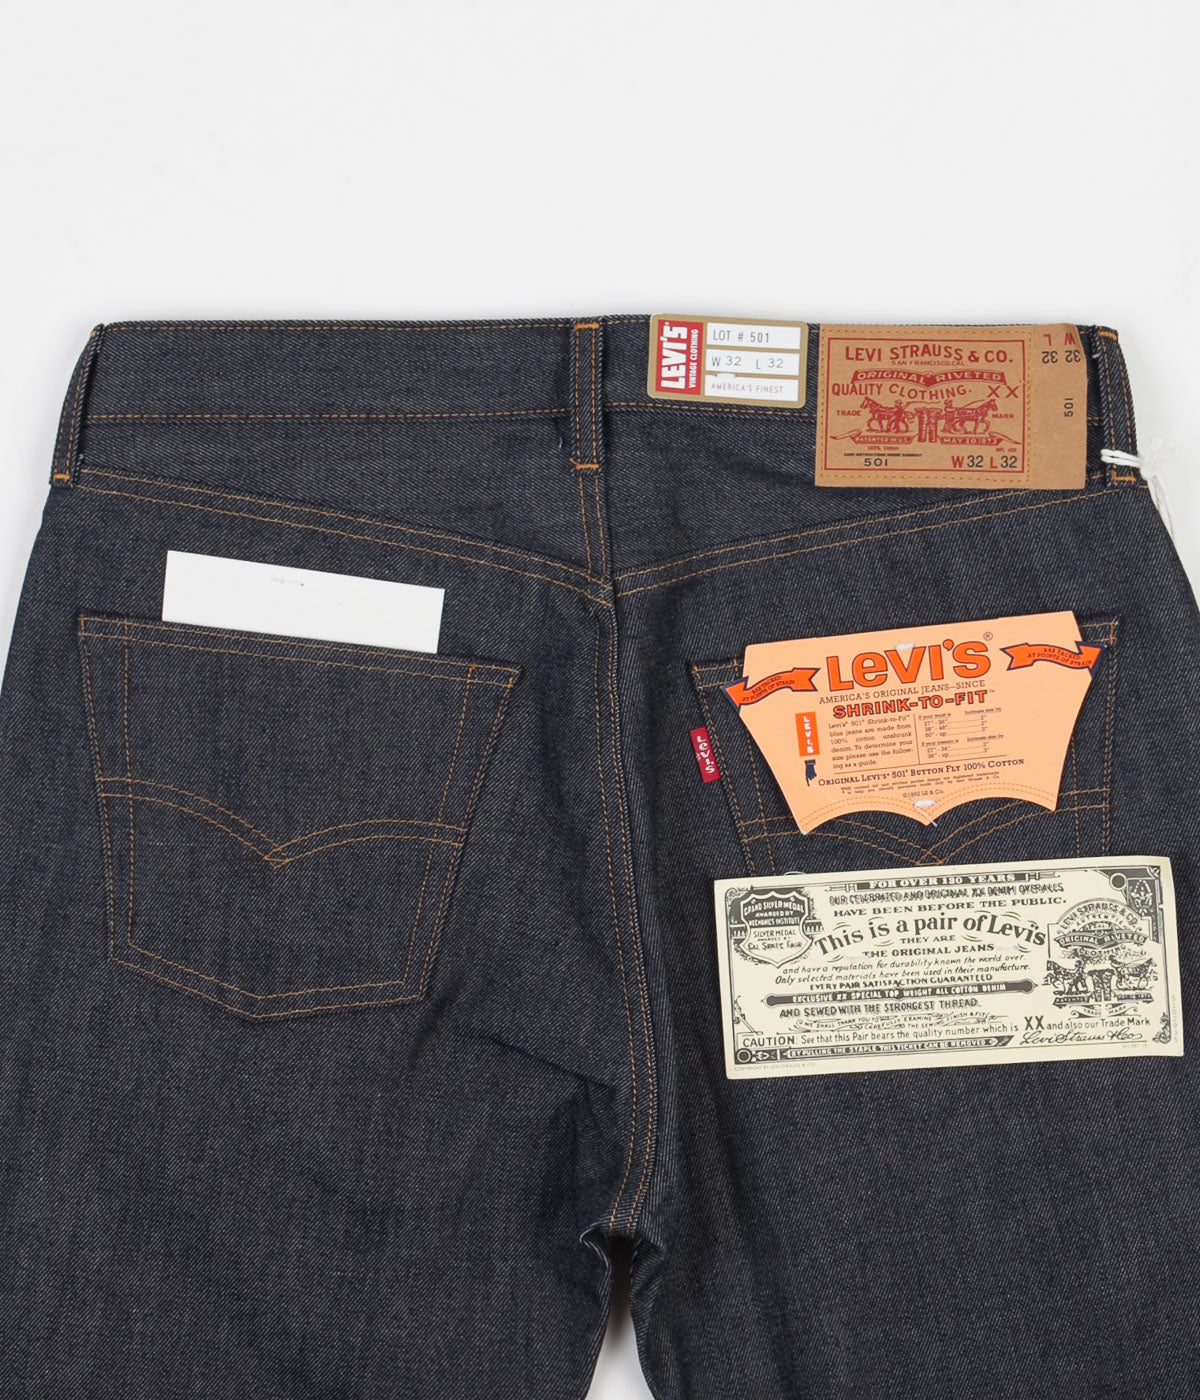 levi's vintage clothing 501